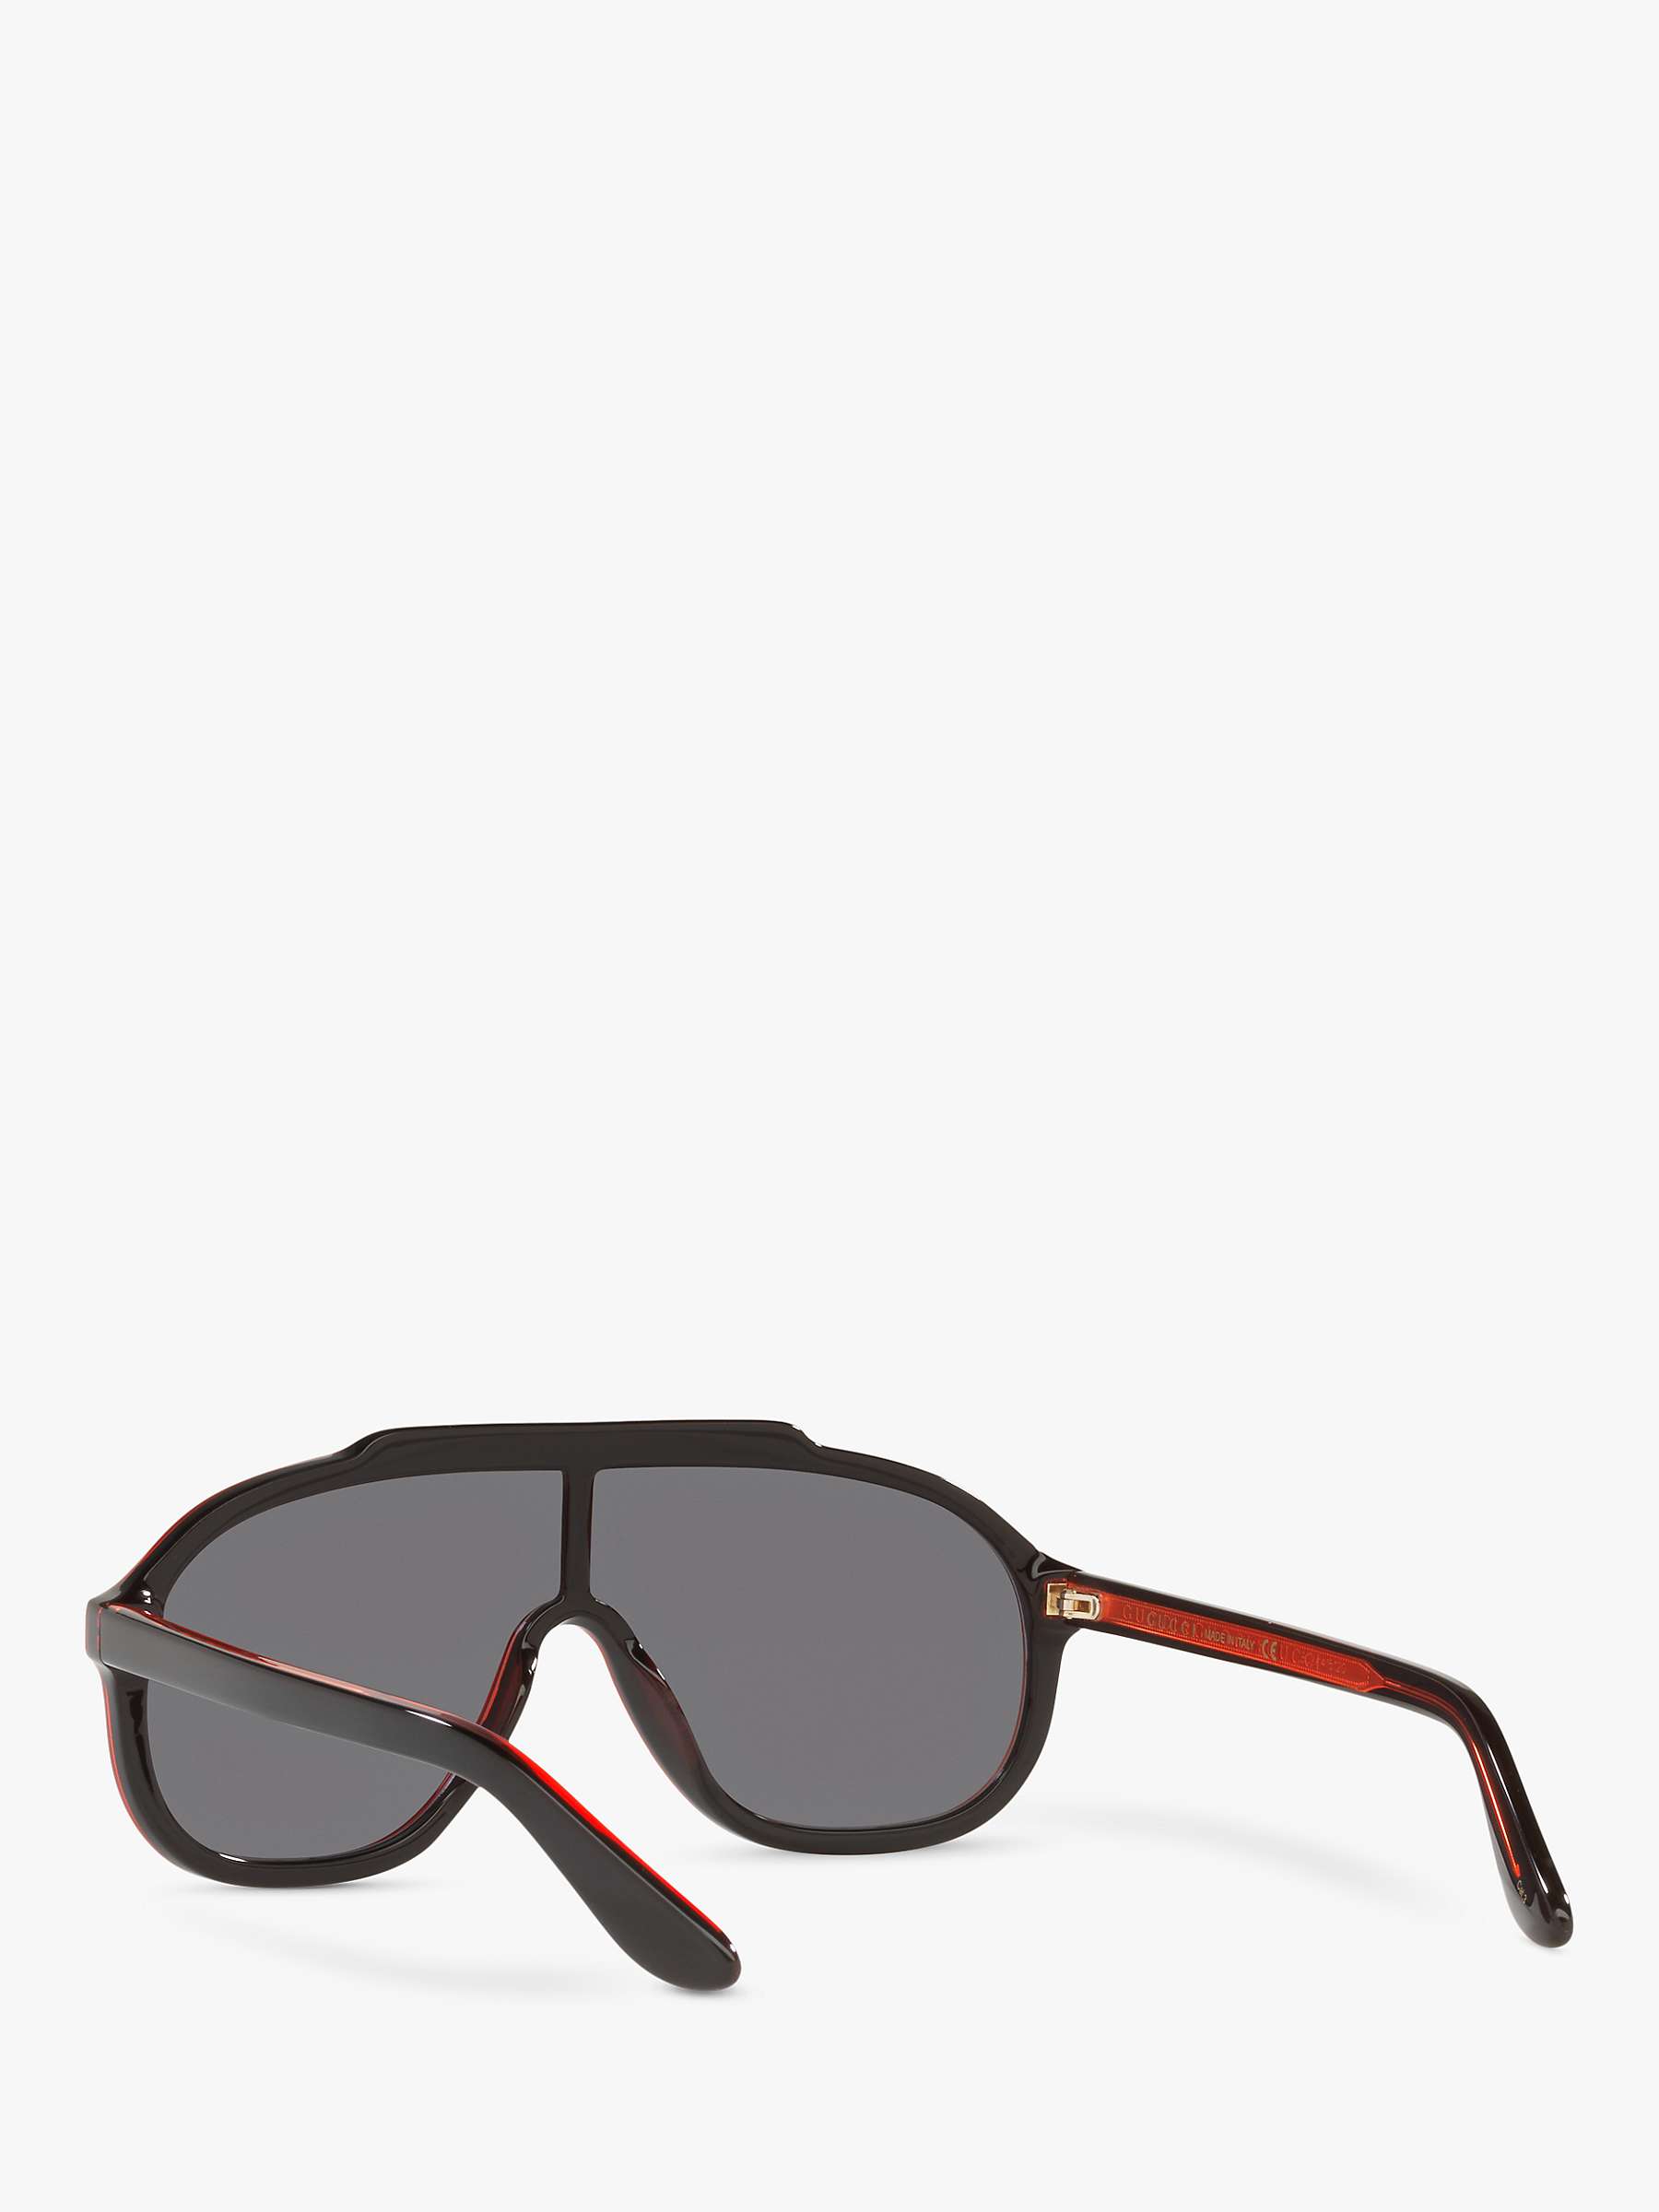 Buy Gucci GG1038S Men's s Pilot Sunglasses, Black/Grey Online at johnlewis.com